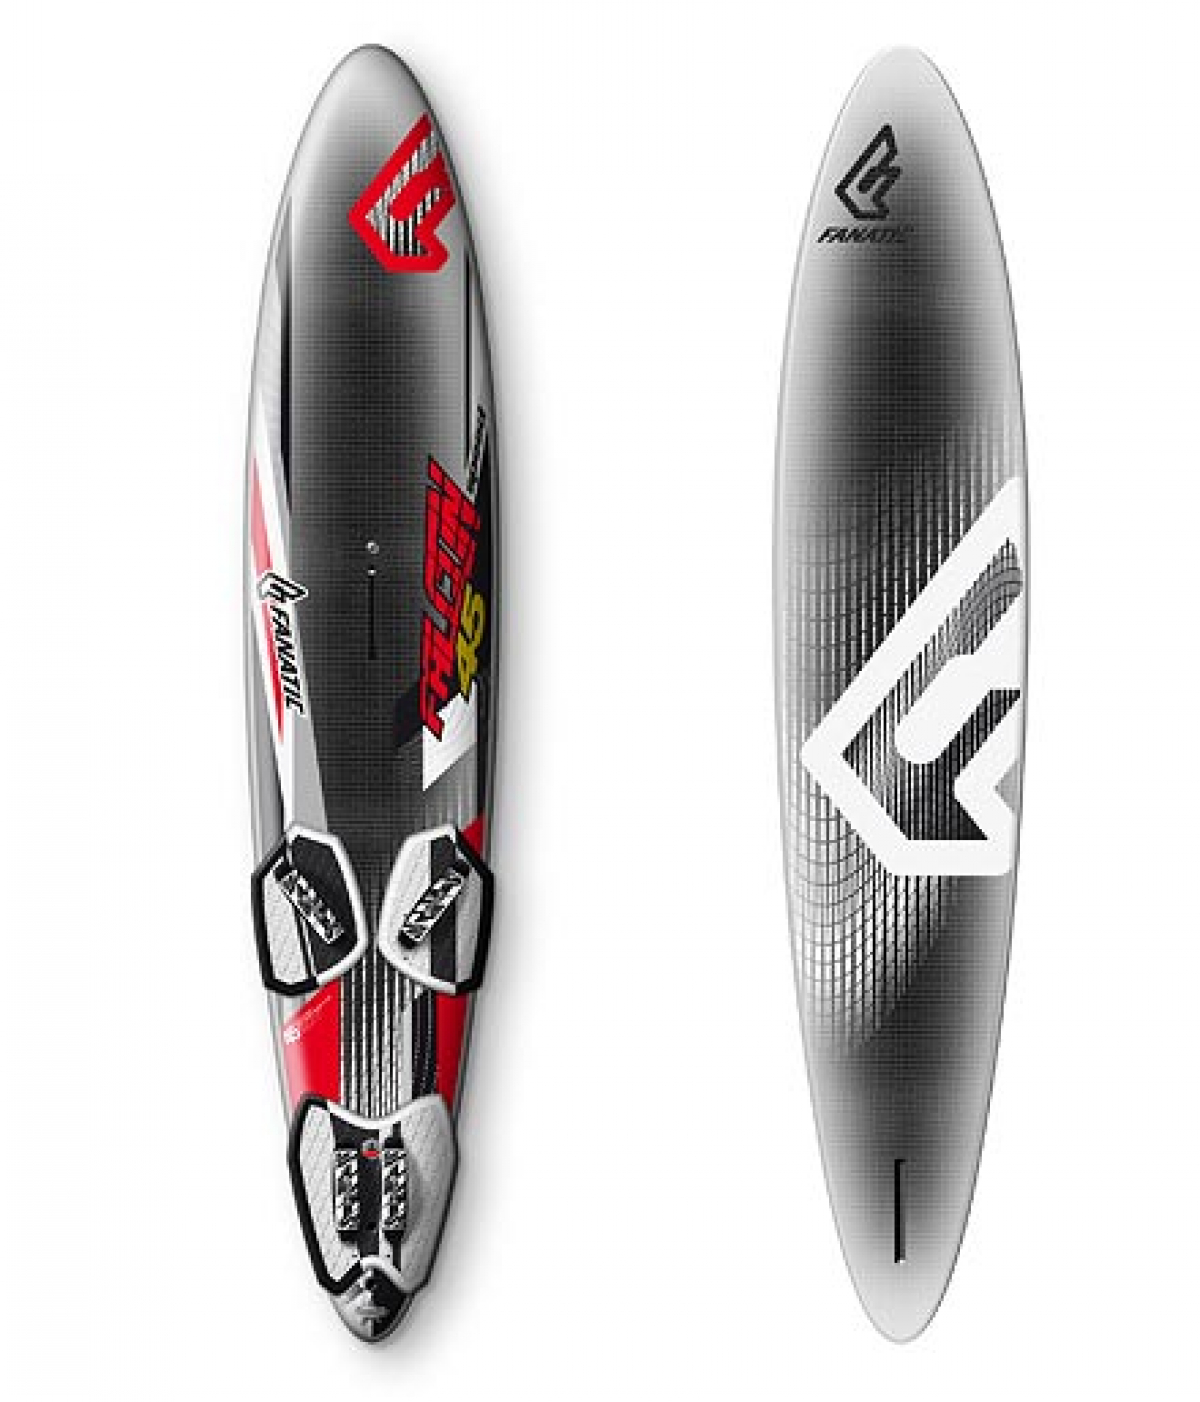 Falcon Speed 45 & 51 - Fanatics neue Speedboards